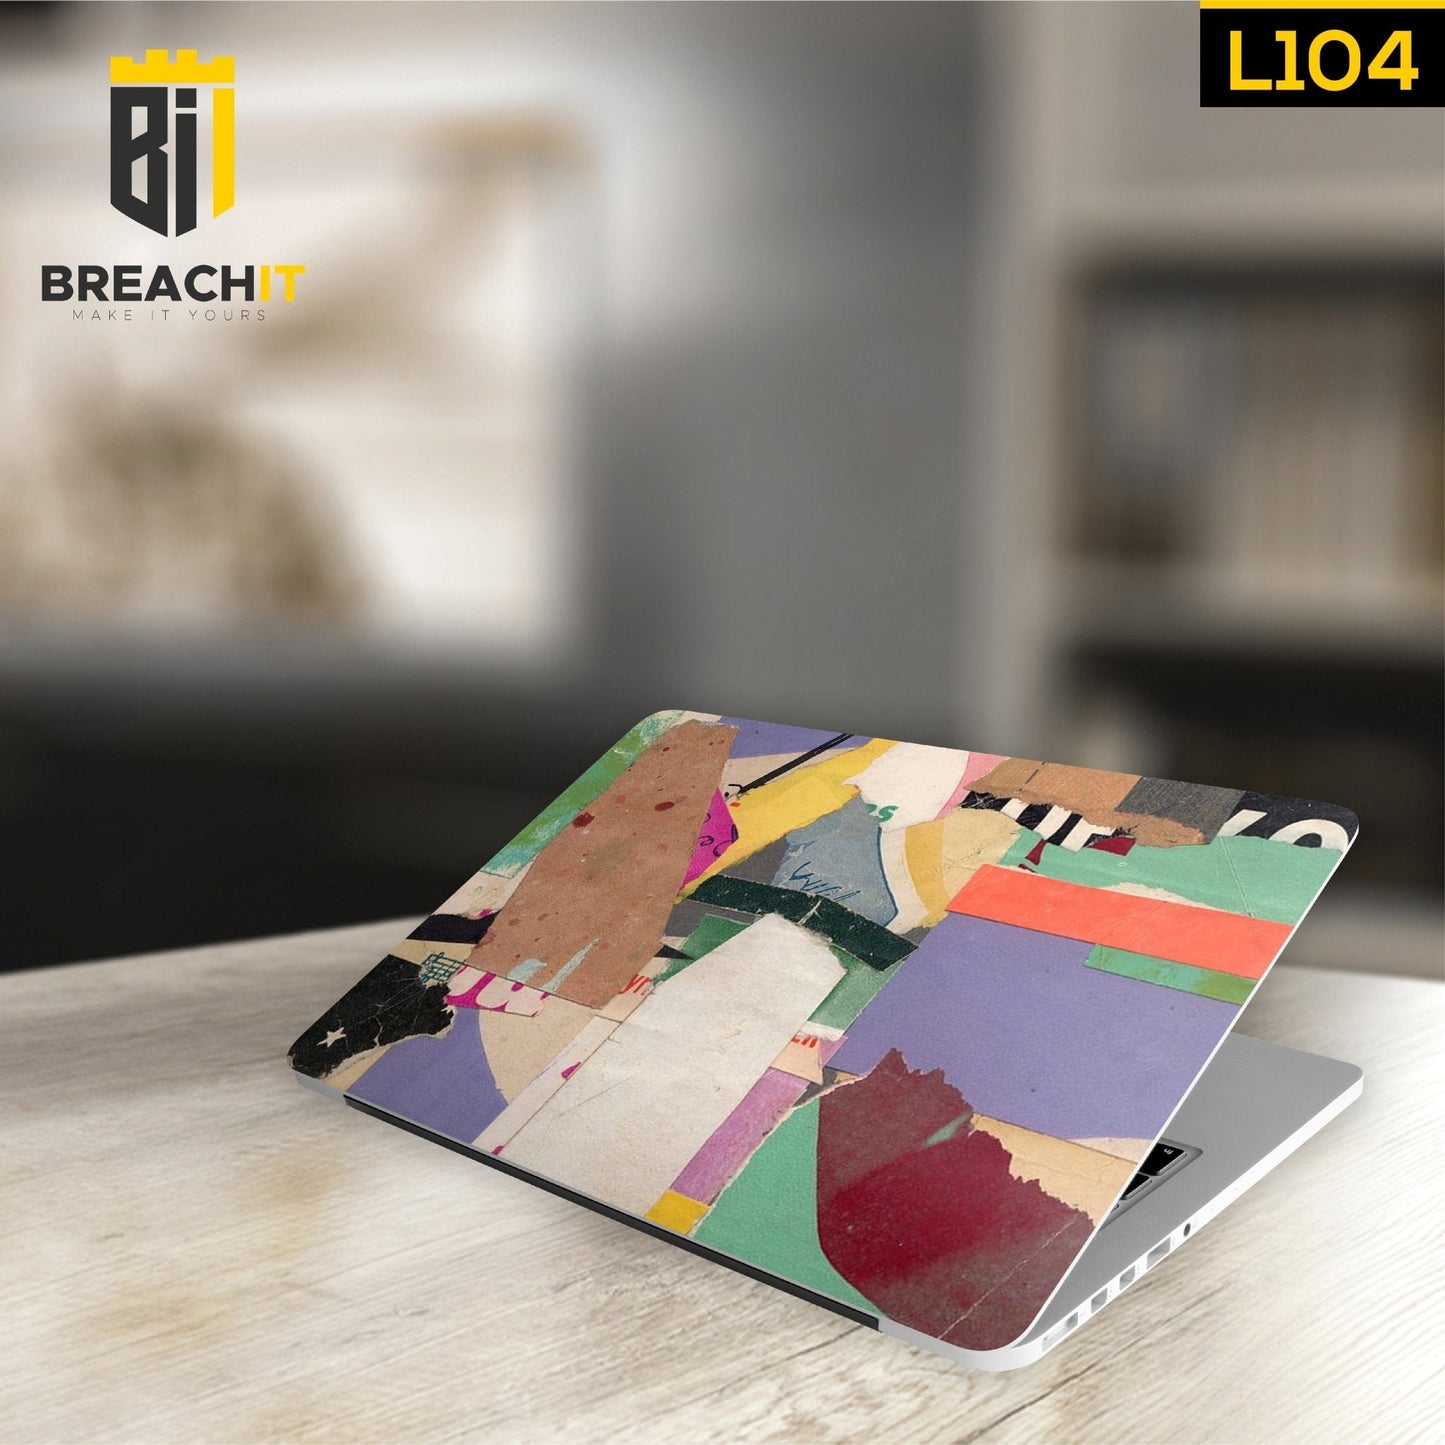 L104 Colorful Aesthetic Laptop Skin - BREACHIT